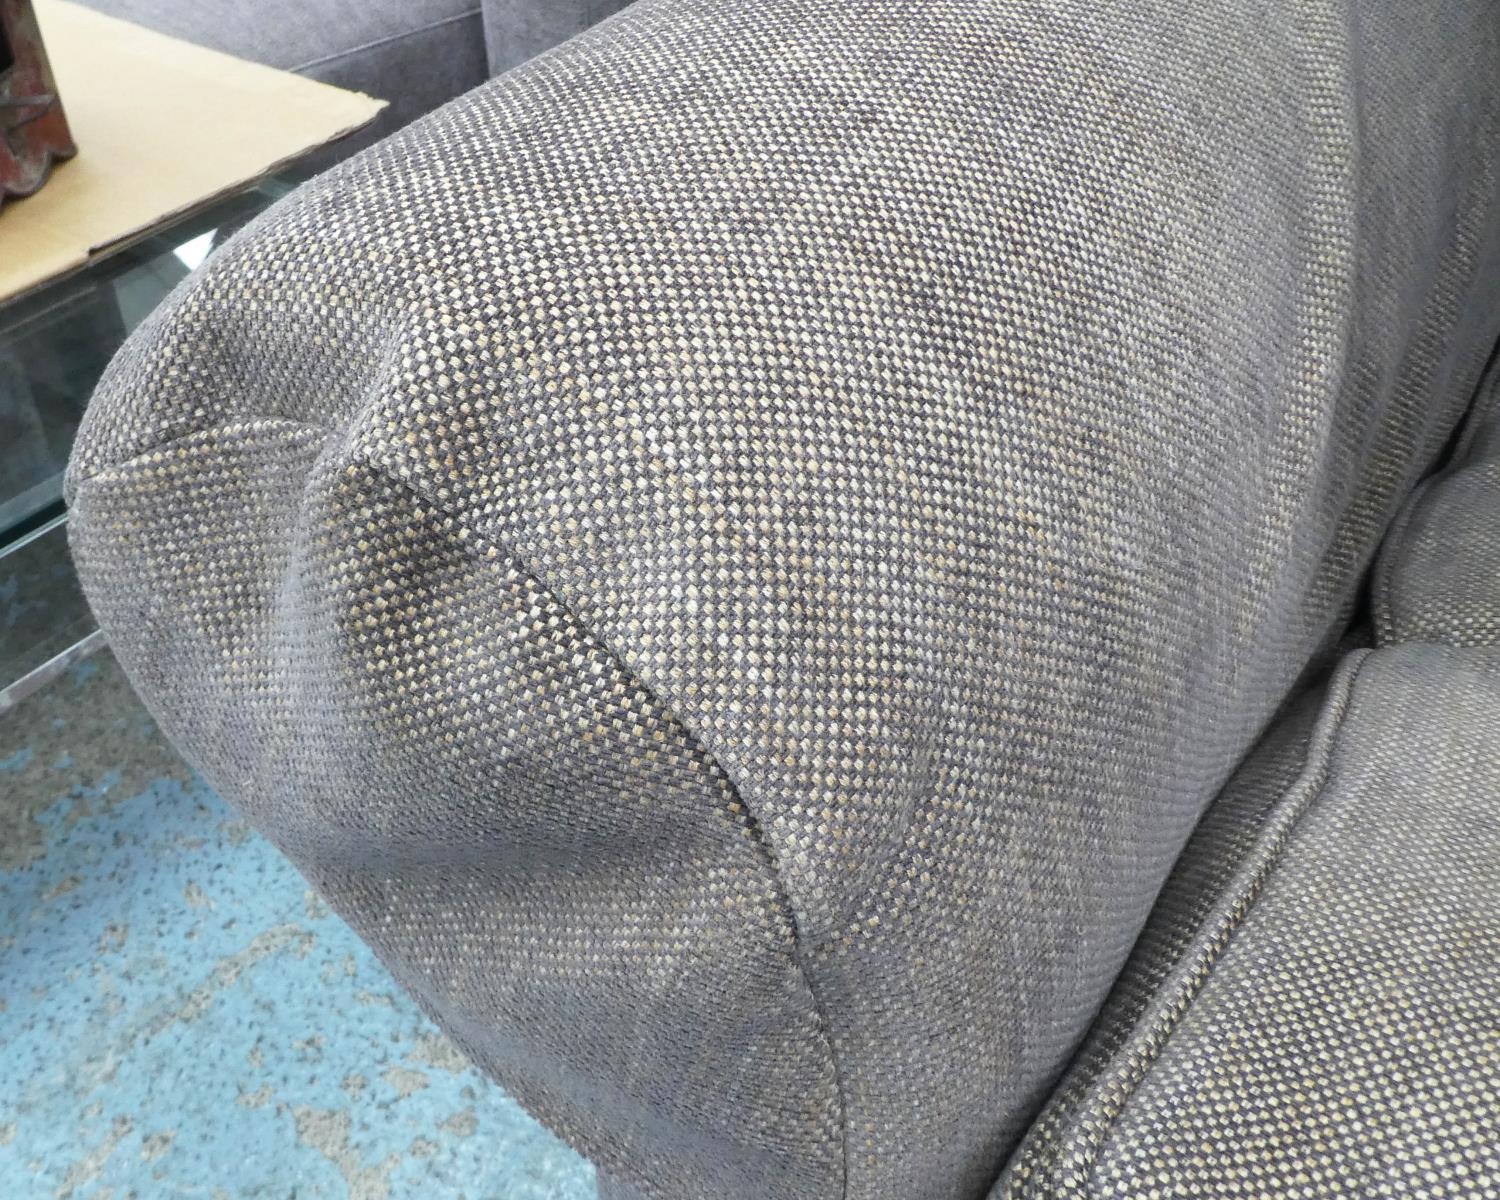 SOFA WORKSHOP SOFA, brown fabric finish, 218cm. - Image 3 of 10